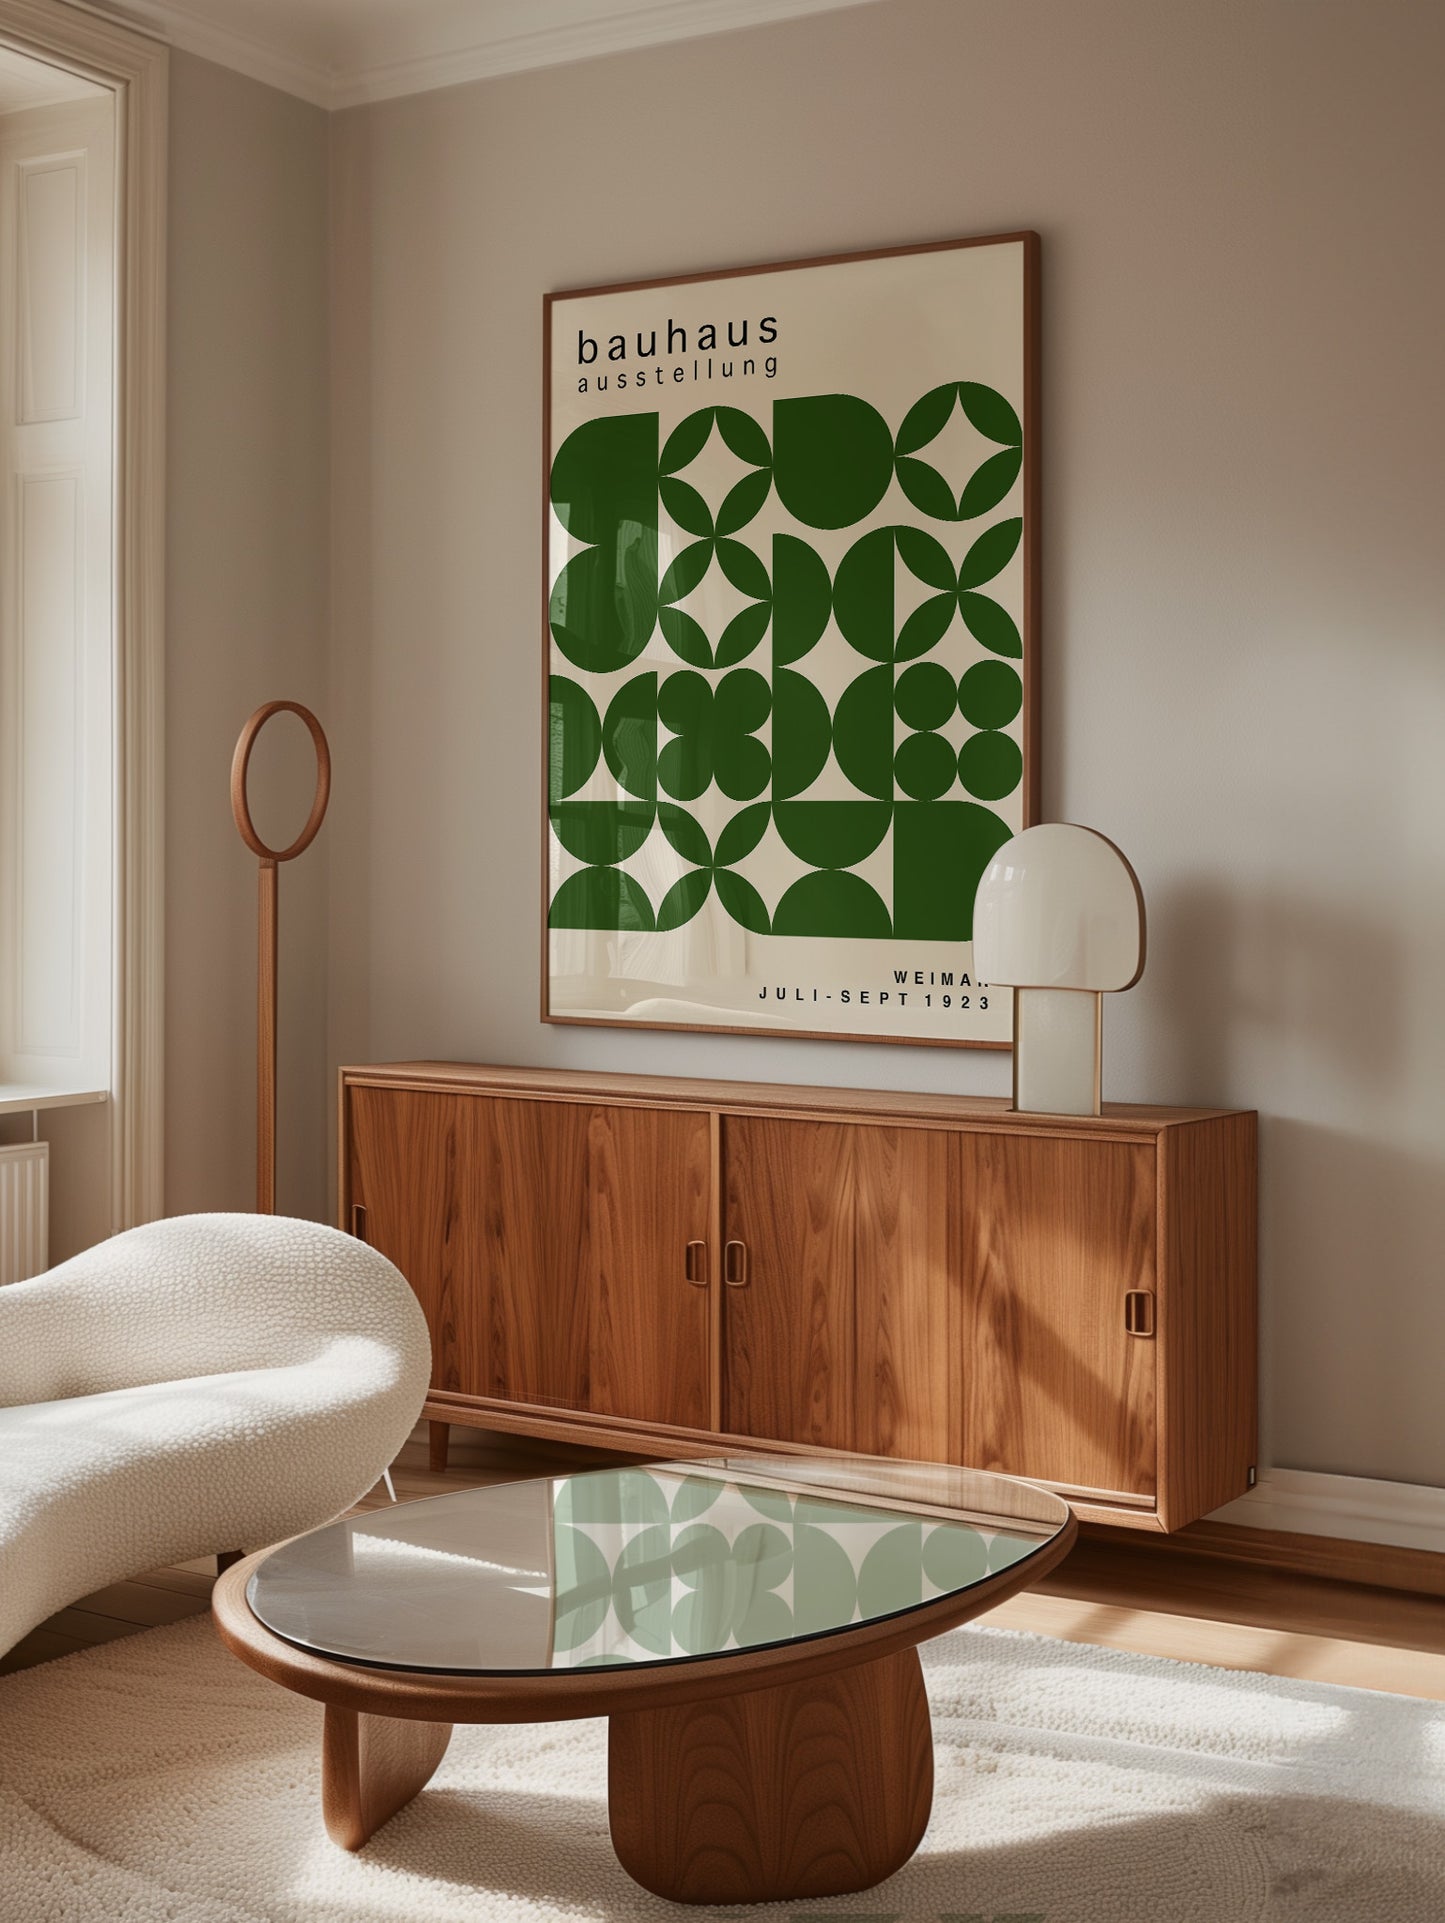 Green Geometric Bauhaus Print